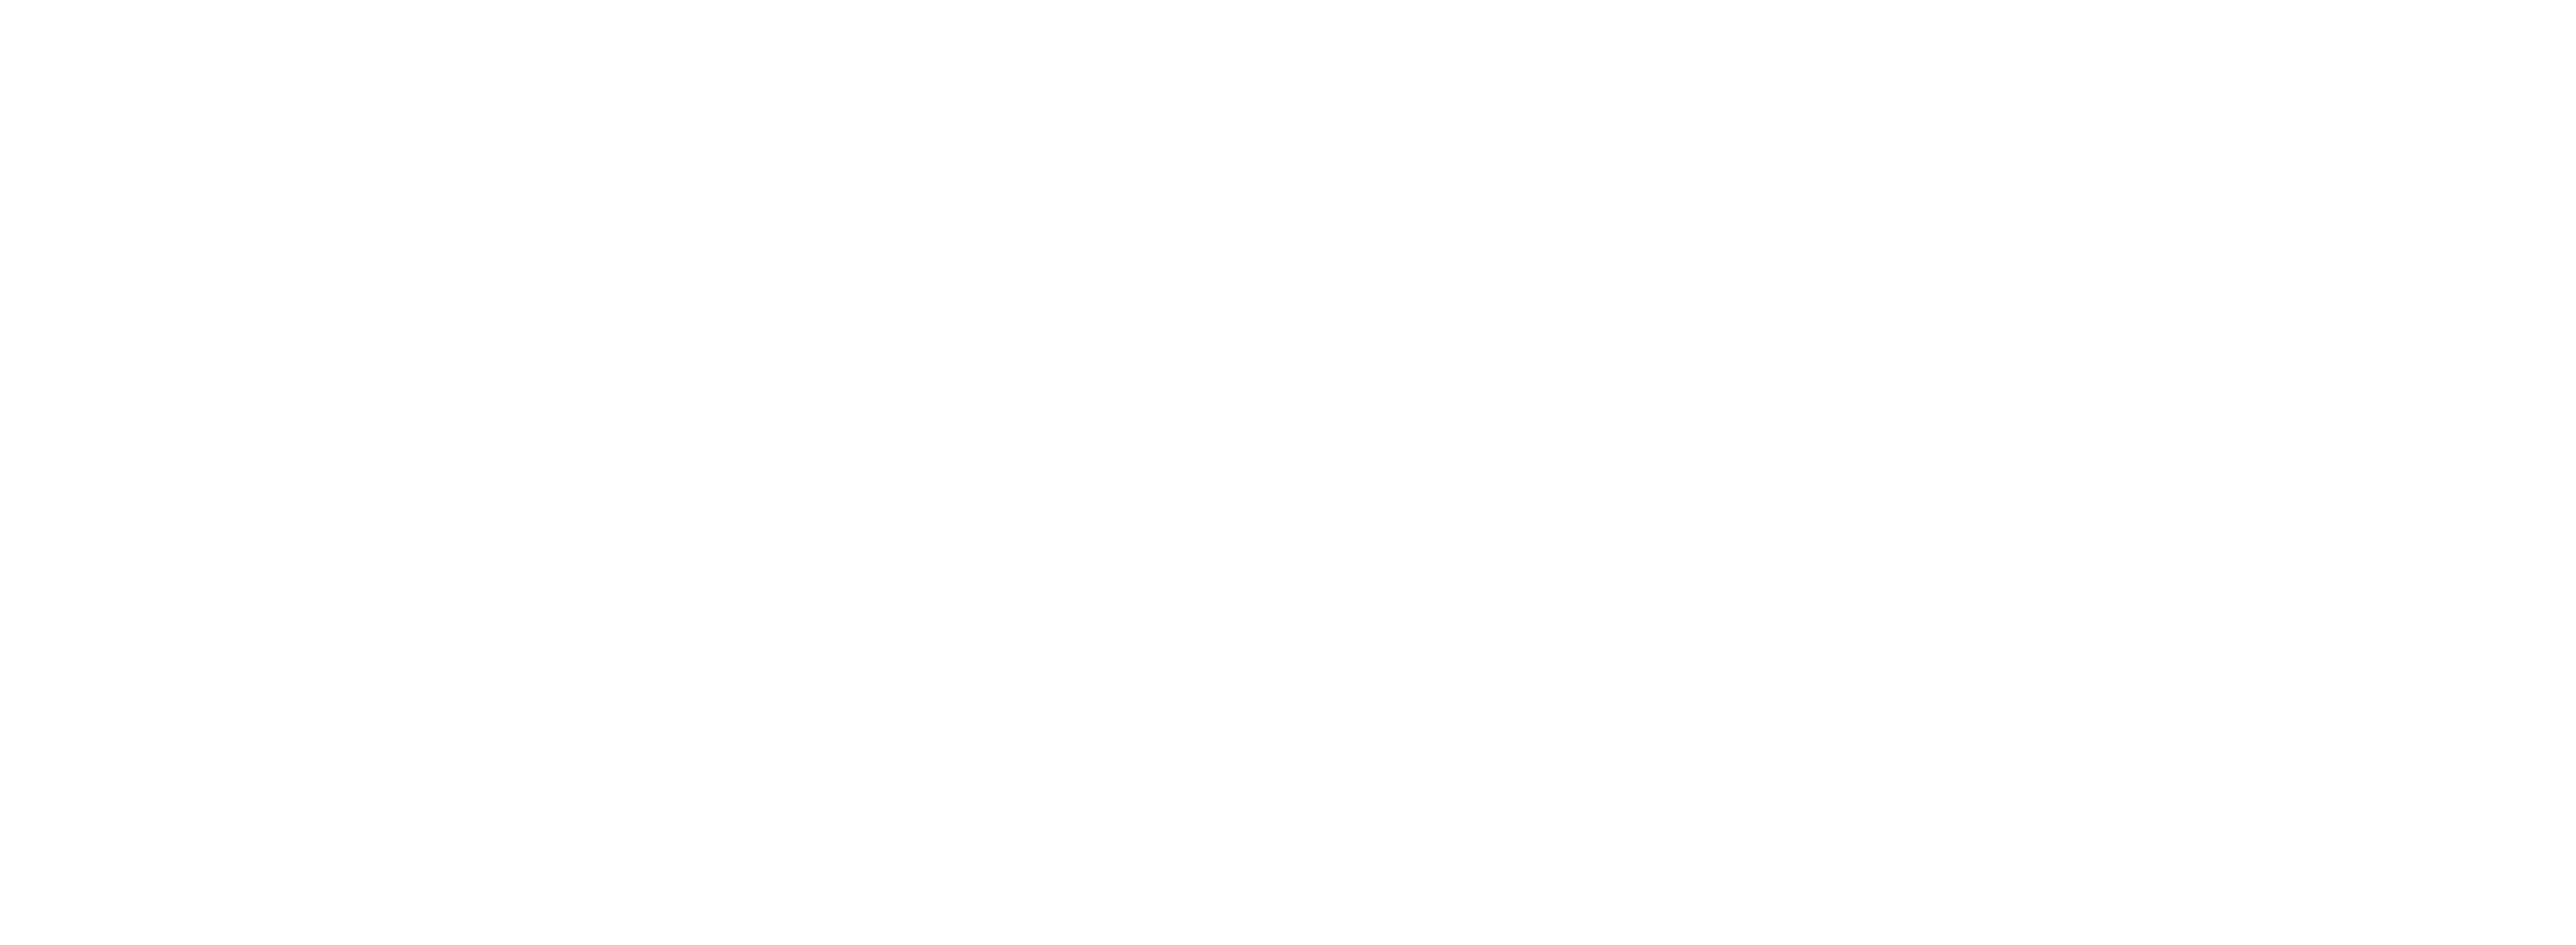 Certification Europe Logo - WHITE